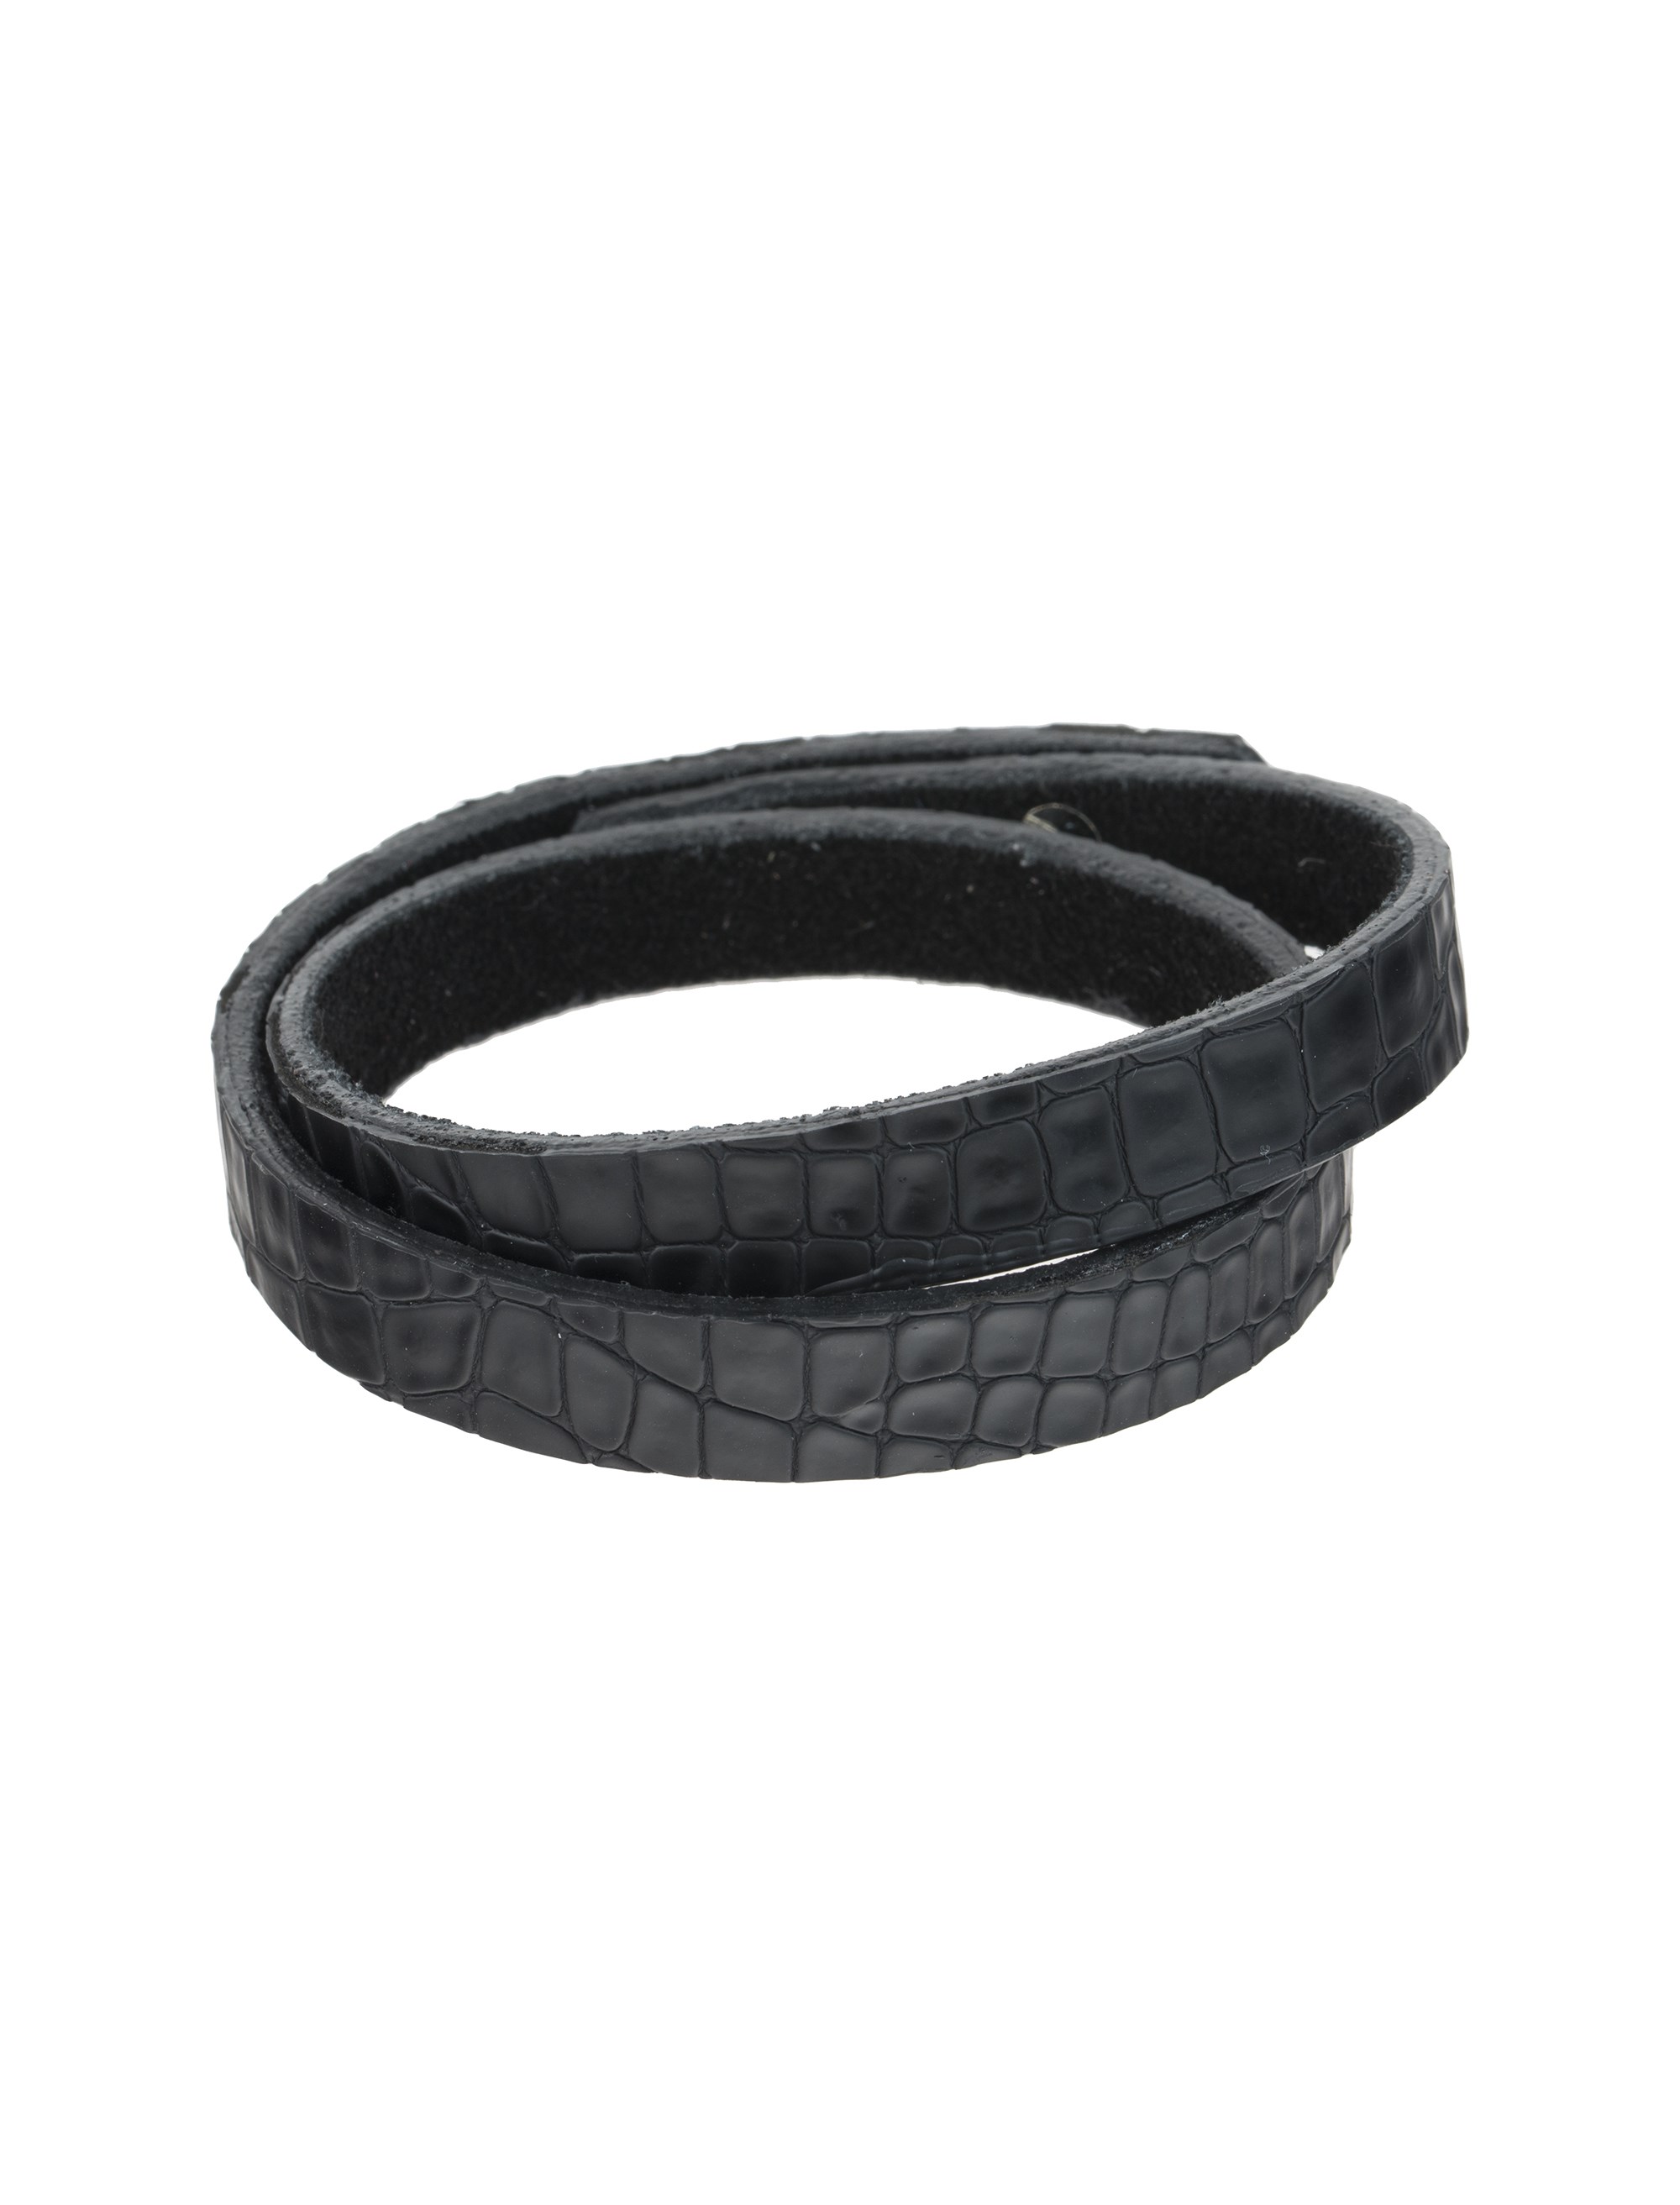 دستبند چرم مردانه - ماکو دیزاین سایز 43 cm